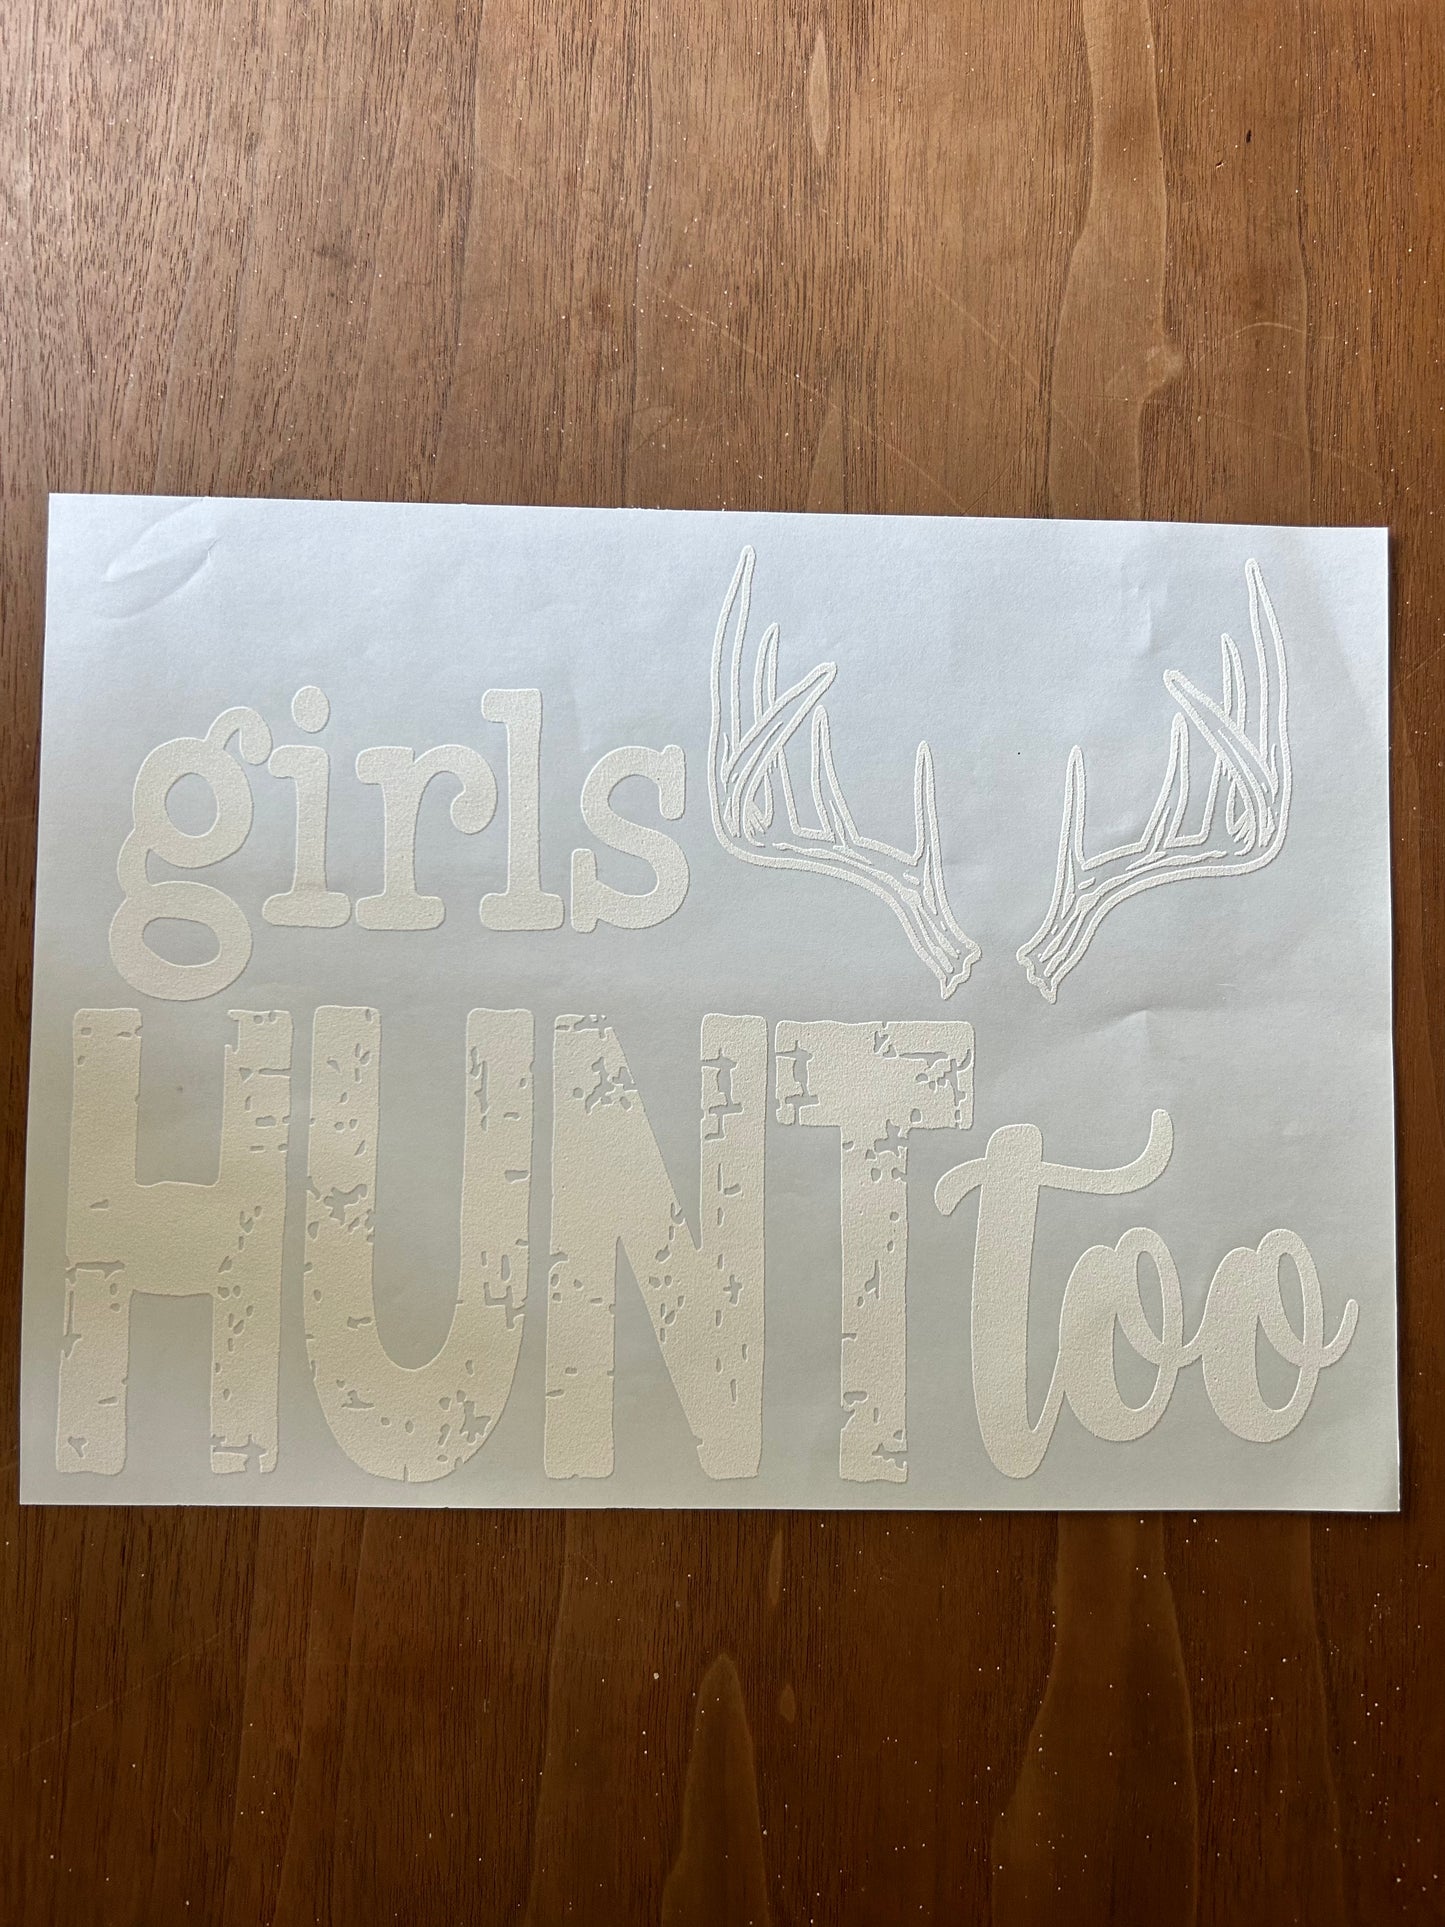 Girls hunt too